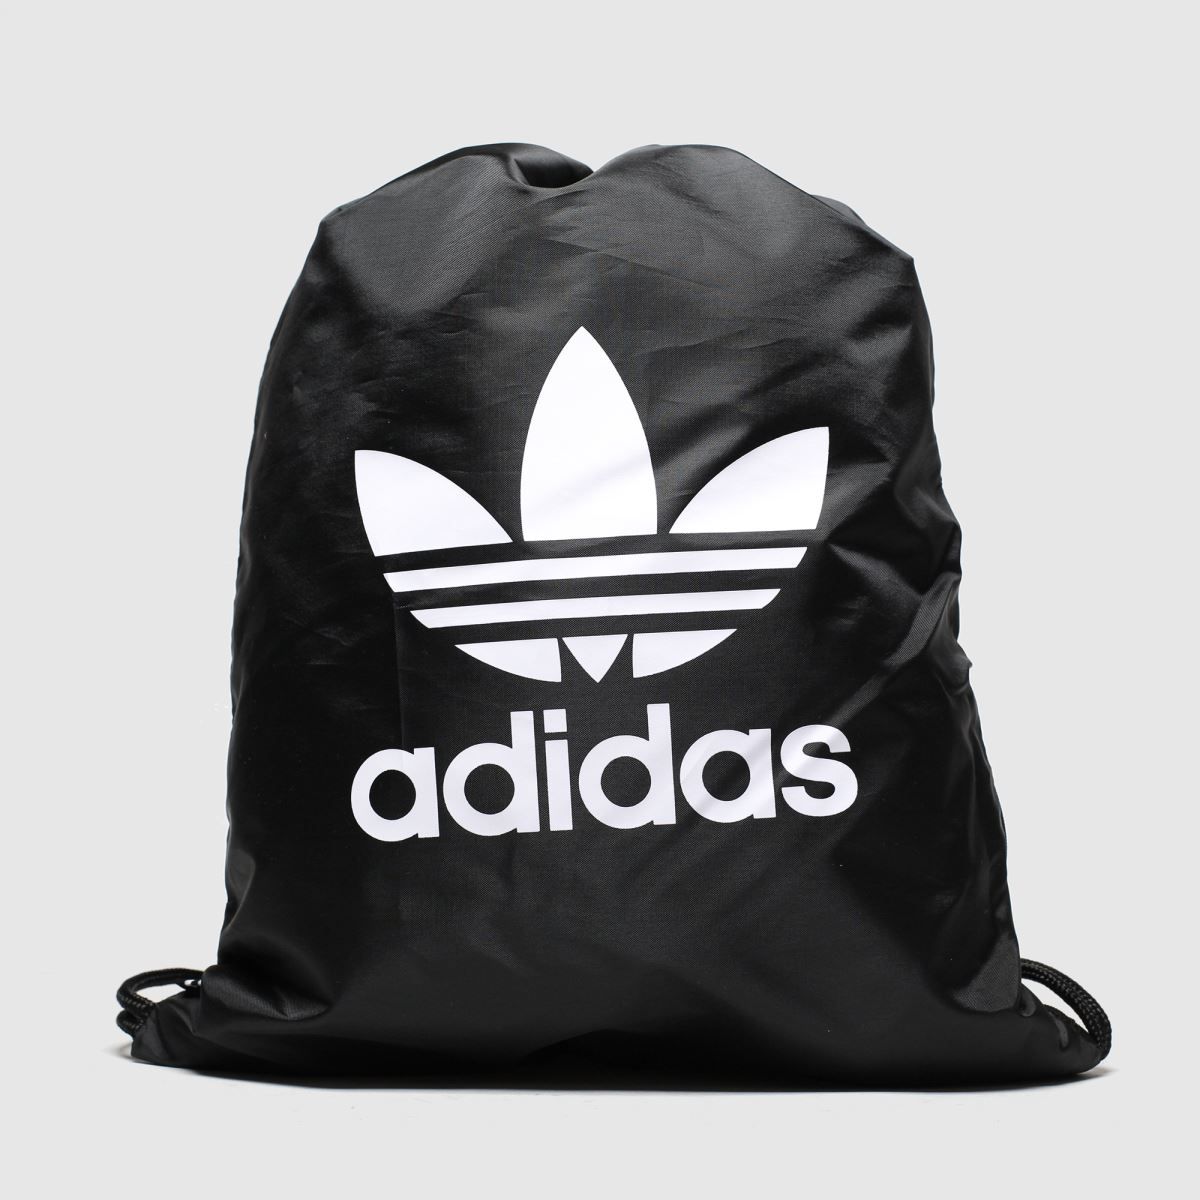 adidas backpack schuh